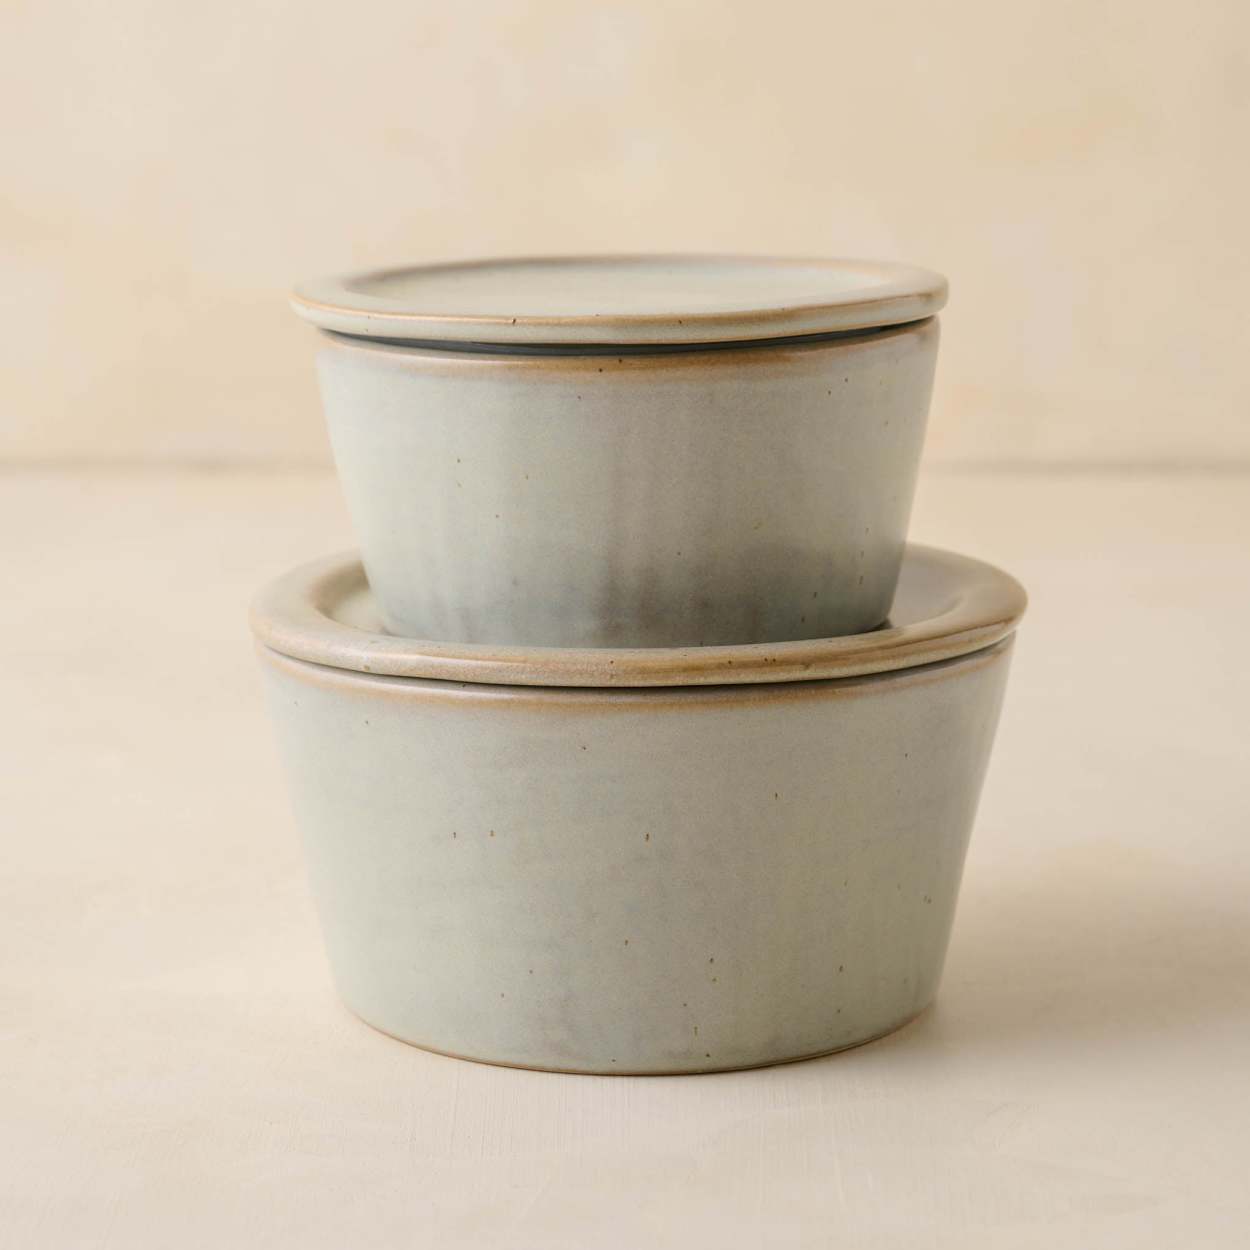 French Grey Ceramic Food Storage Bowl - Magnolia